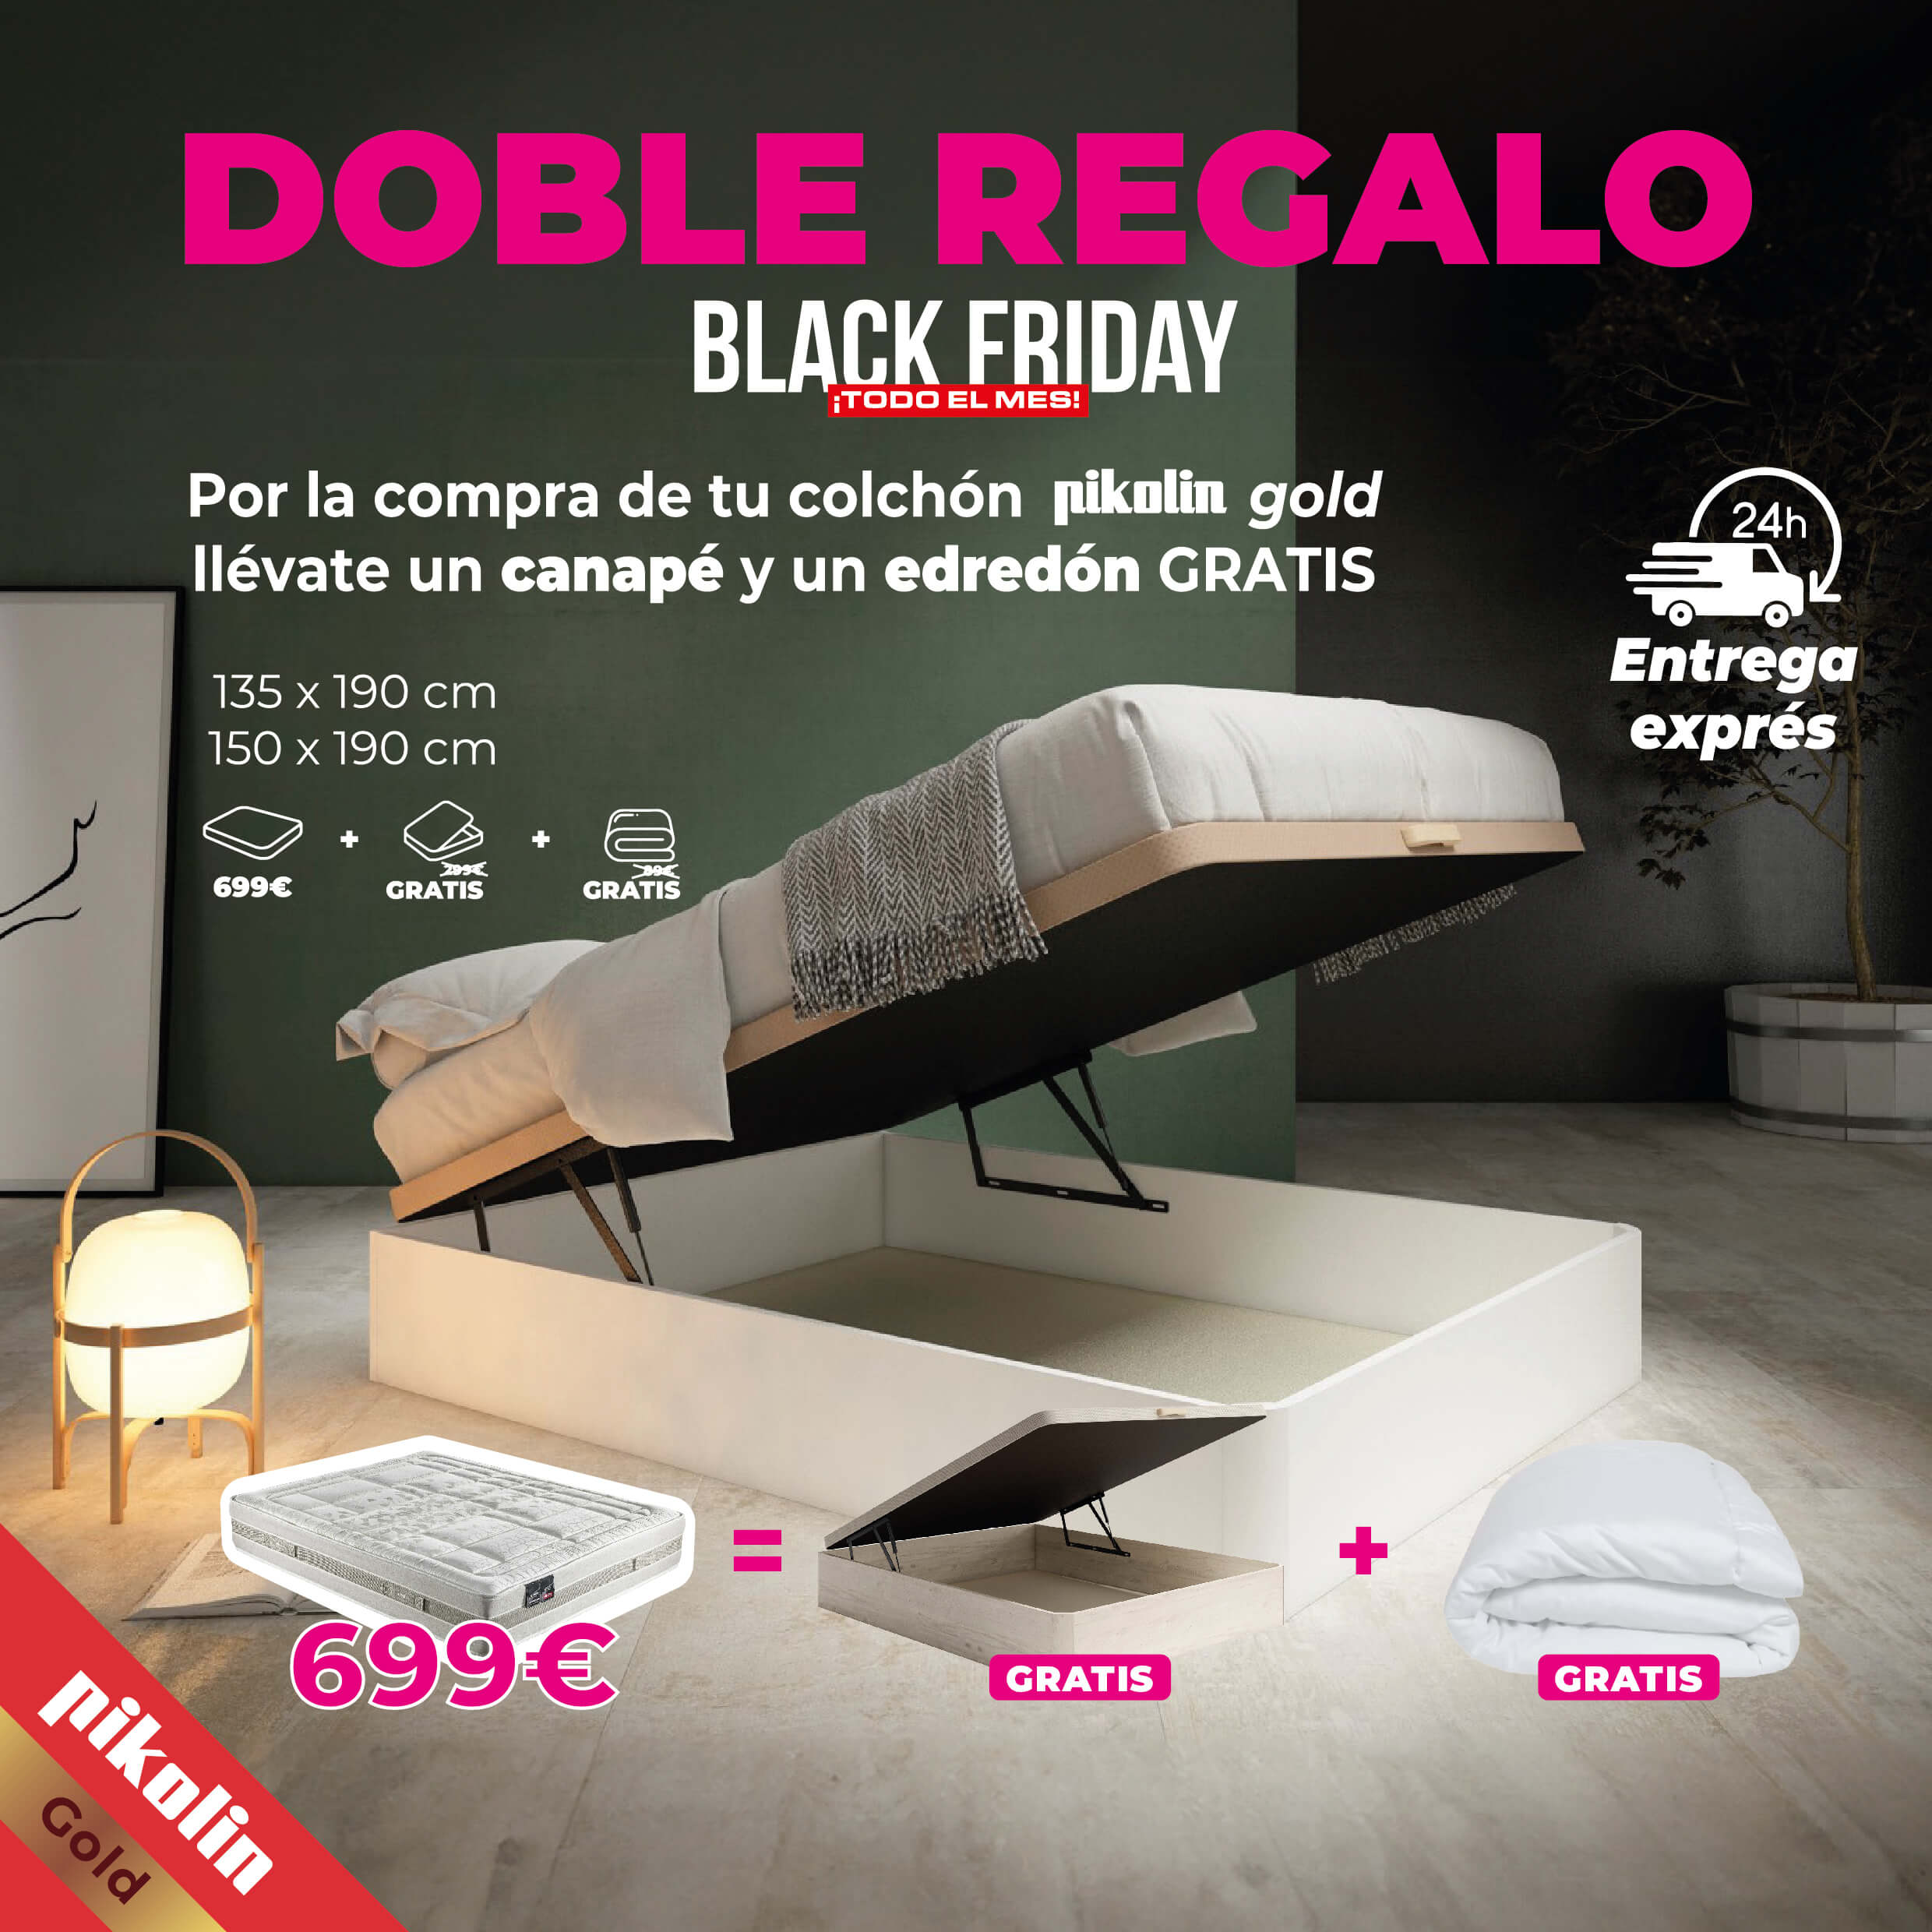 Promo Black Friday muebles Mallorca